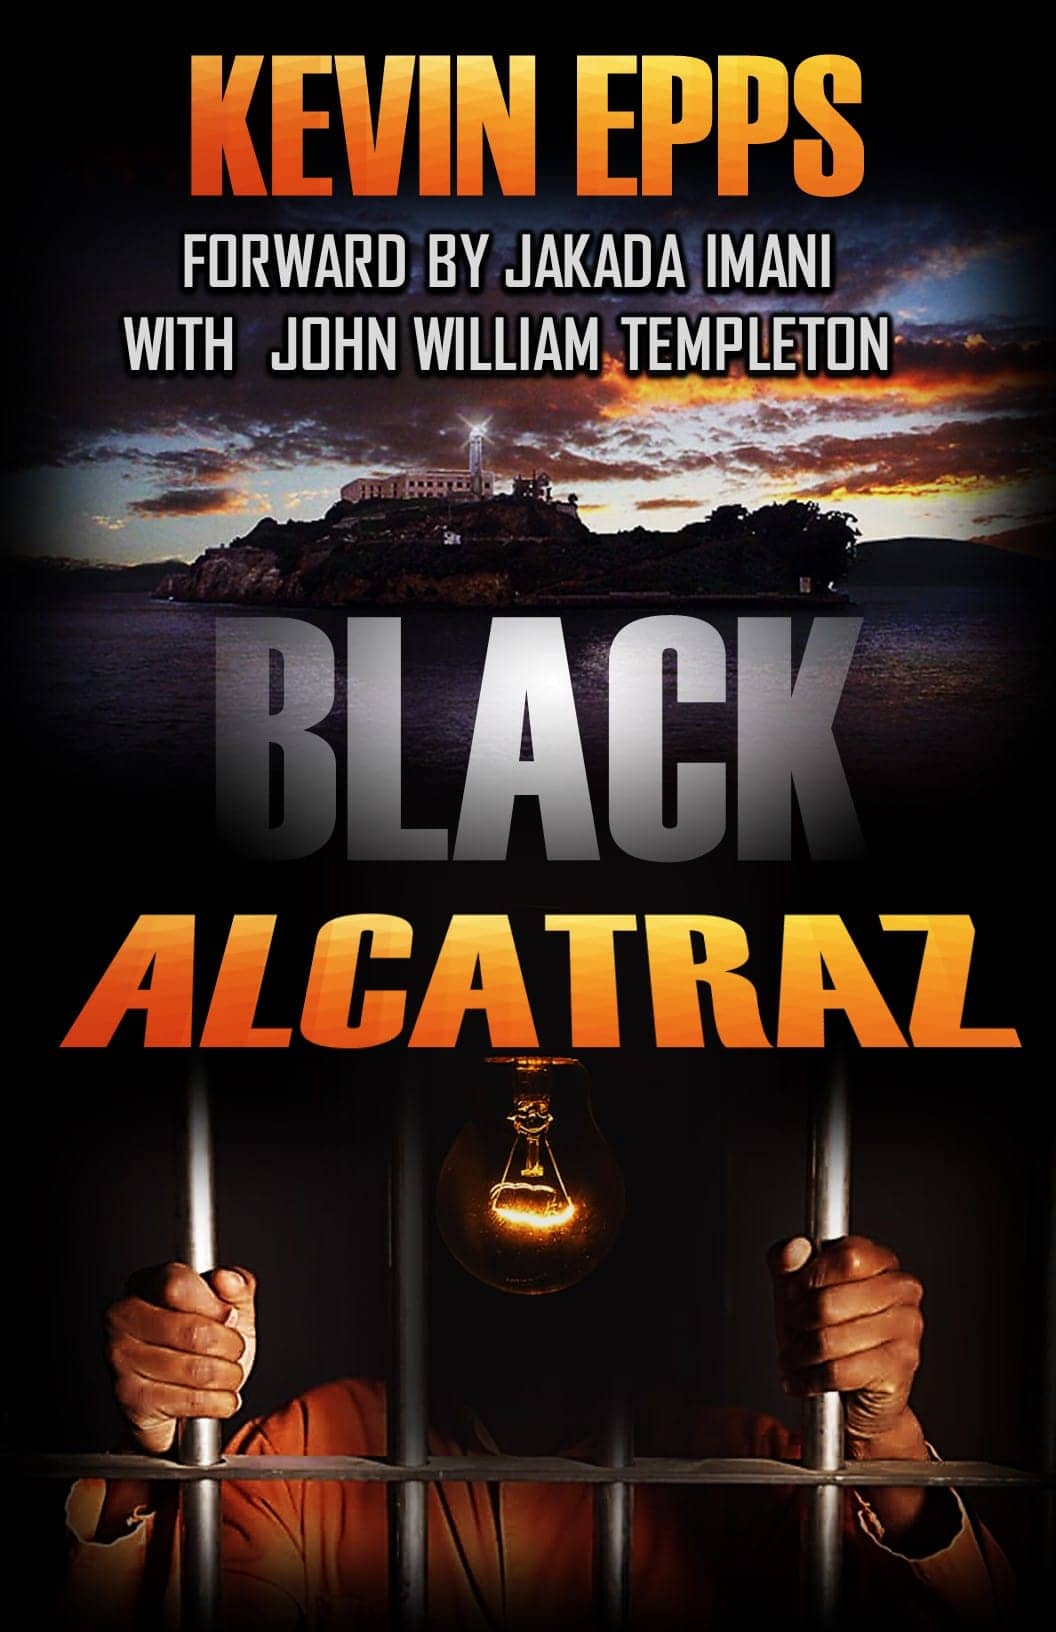 Kevin-Epps’-‘Black-Alcatraz’-cover, Filmmaker Kevin Epps releases new book, ‘Black Alcatraz’, Culture Currents 